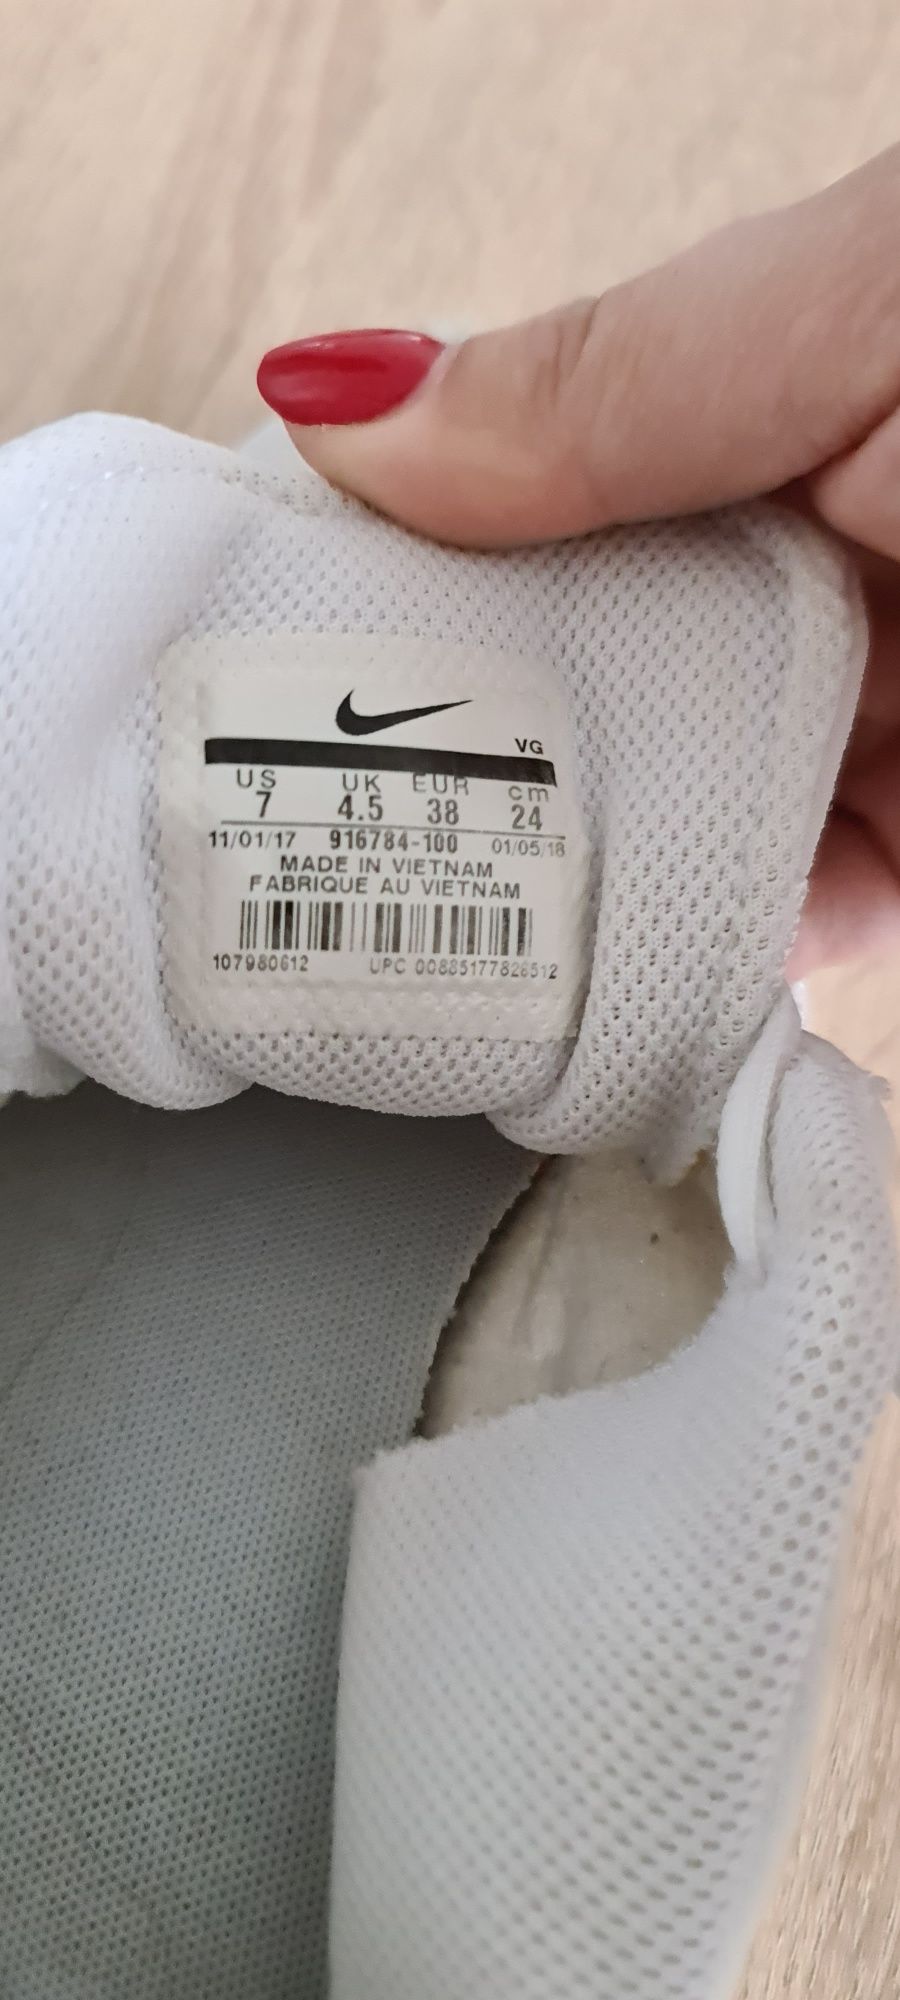 Adidasi Nike marime 38